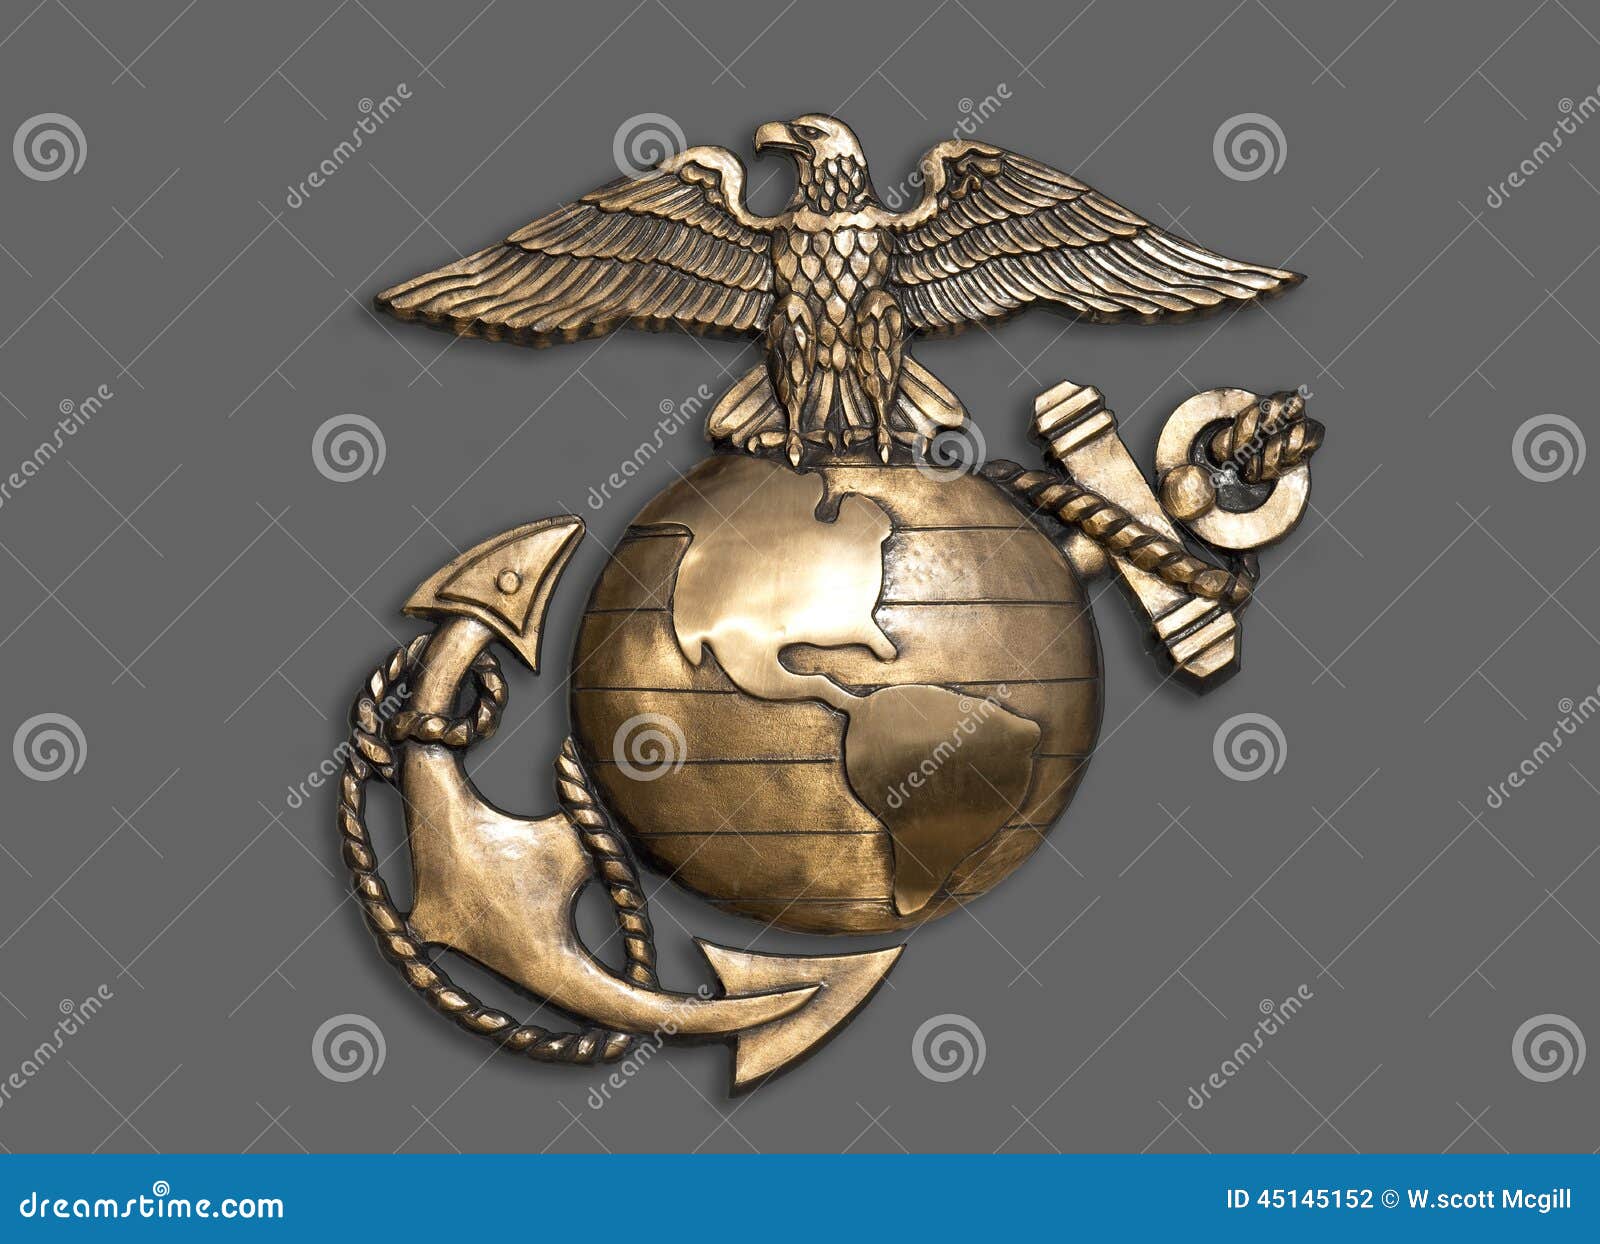 marine eagle ,globe and anchor.